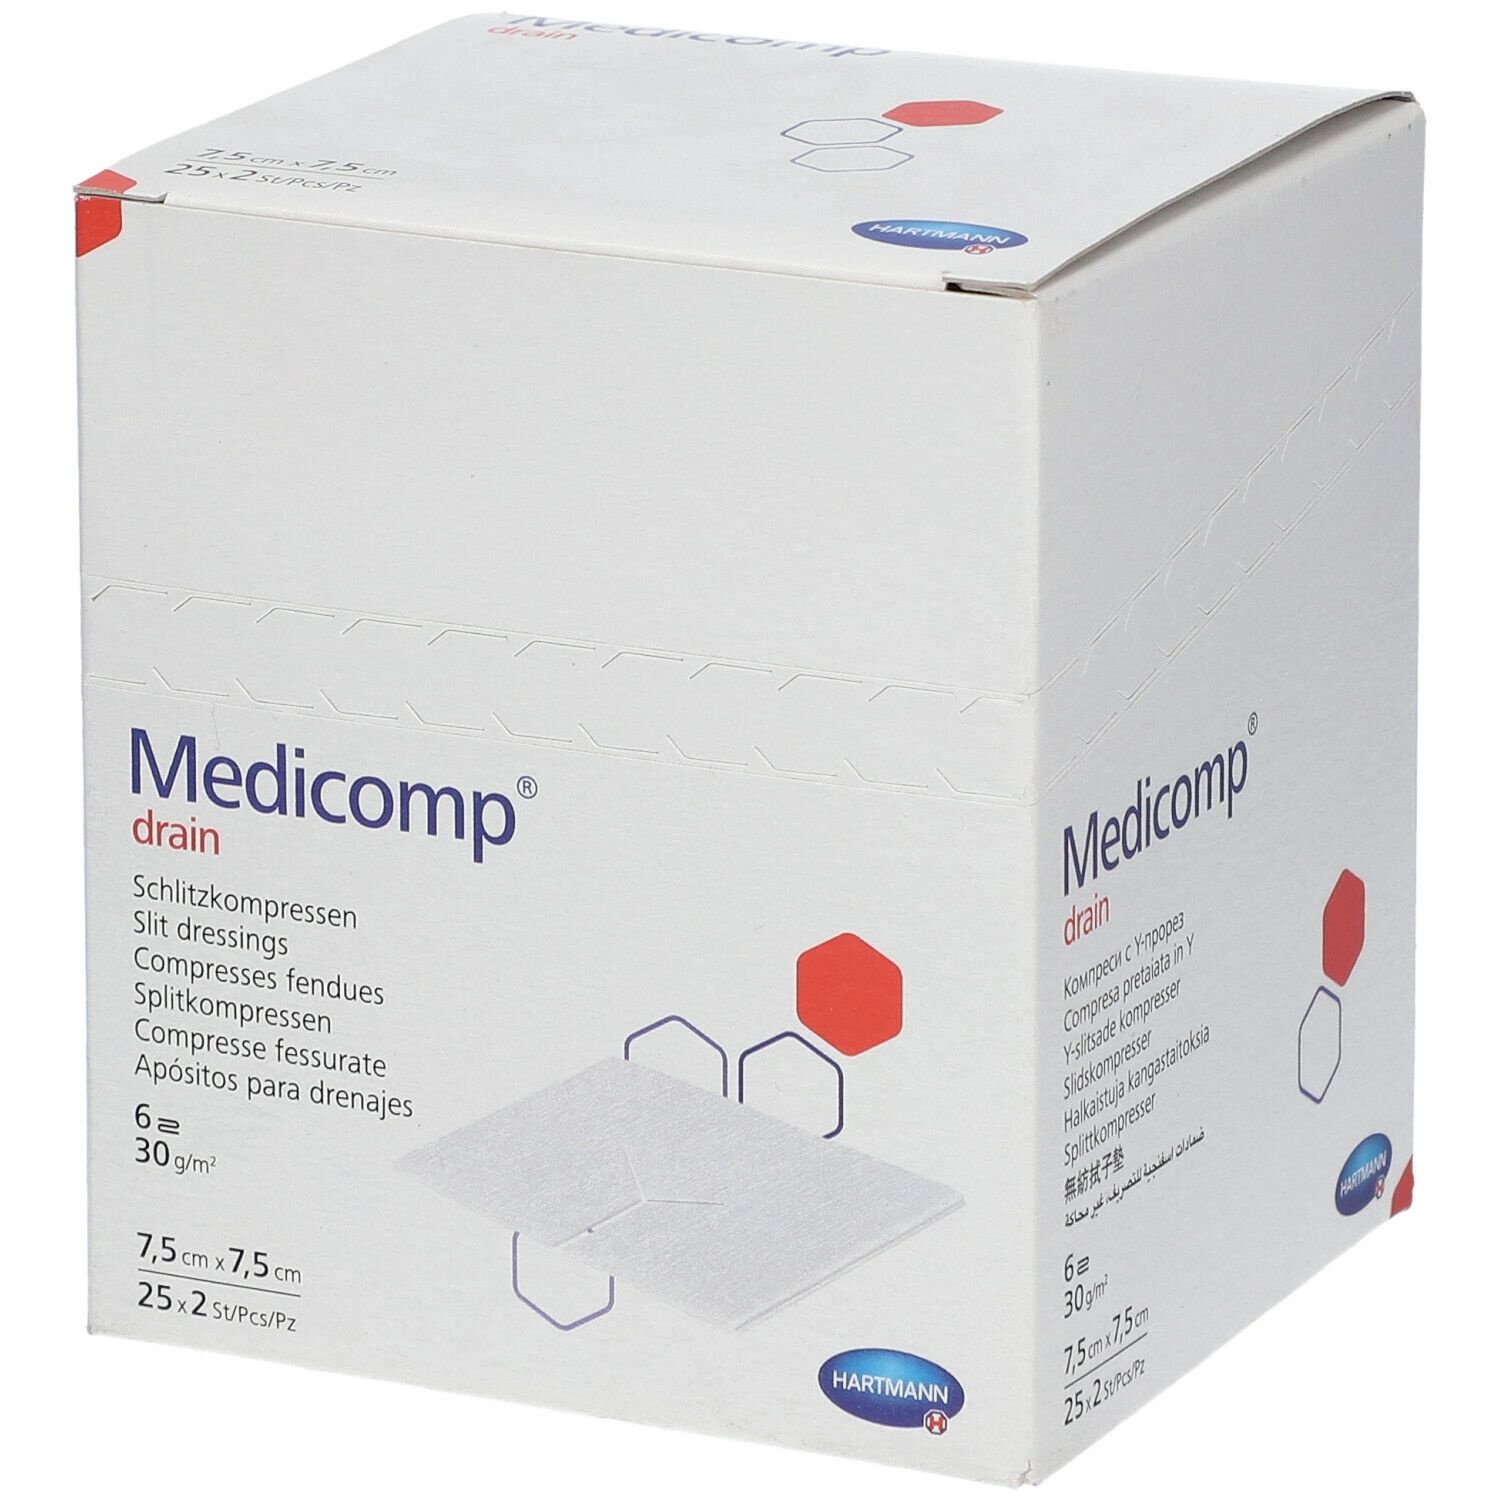 Medicomp® drain 7,5 cm x 7,5 cm